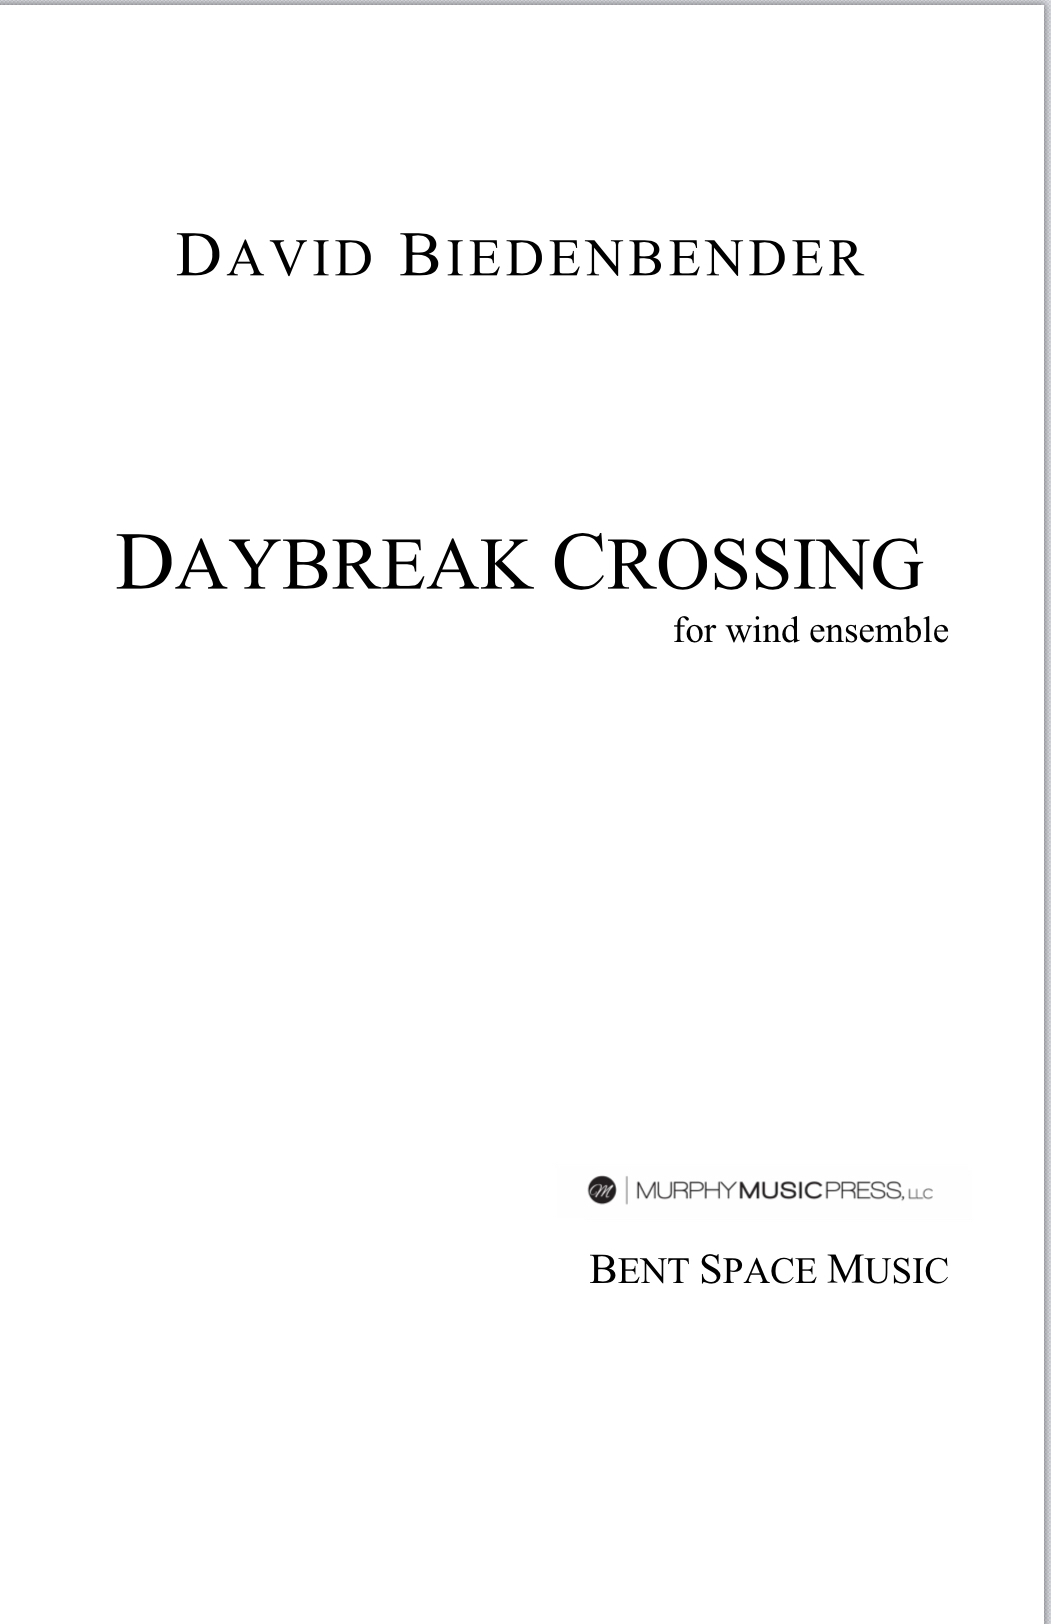 Daybreak Crossing by David Biedenbender